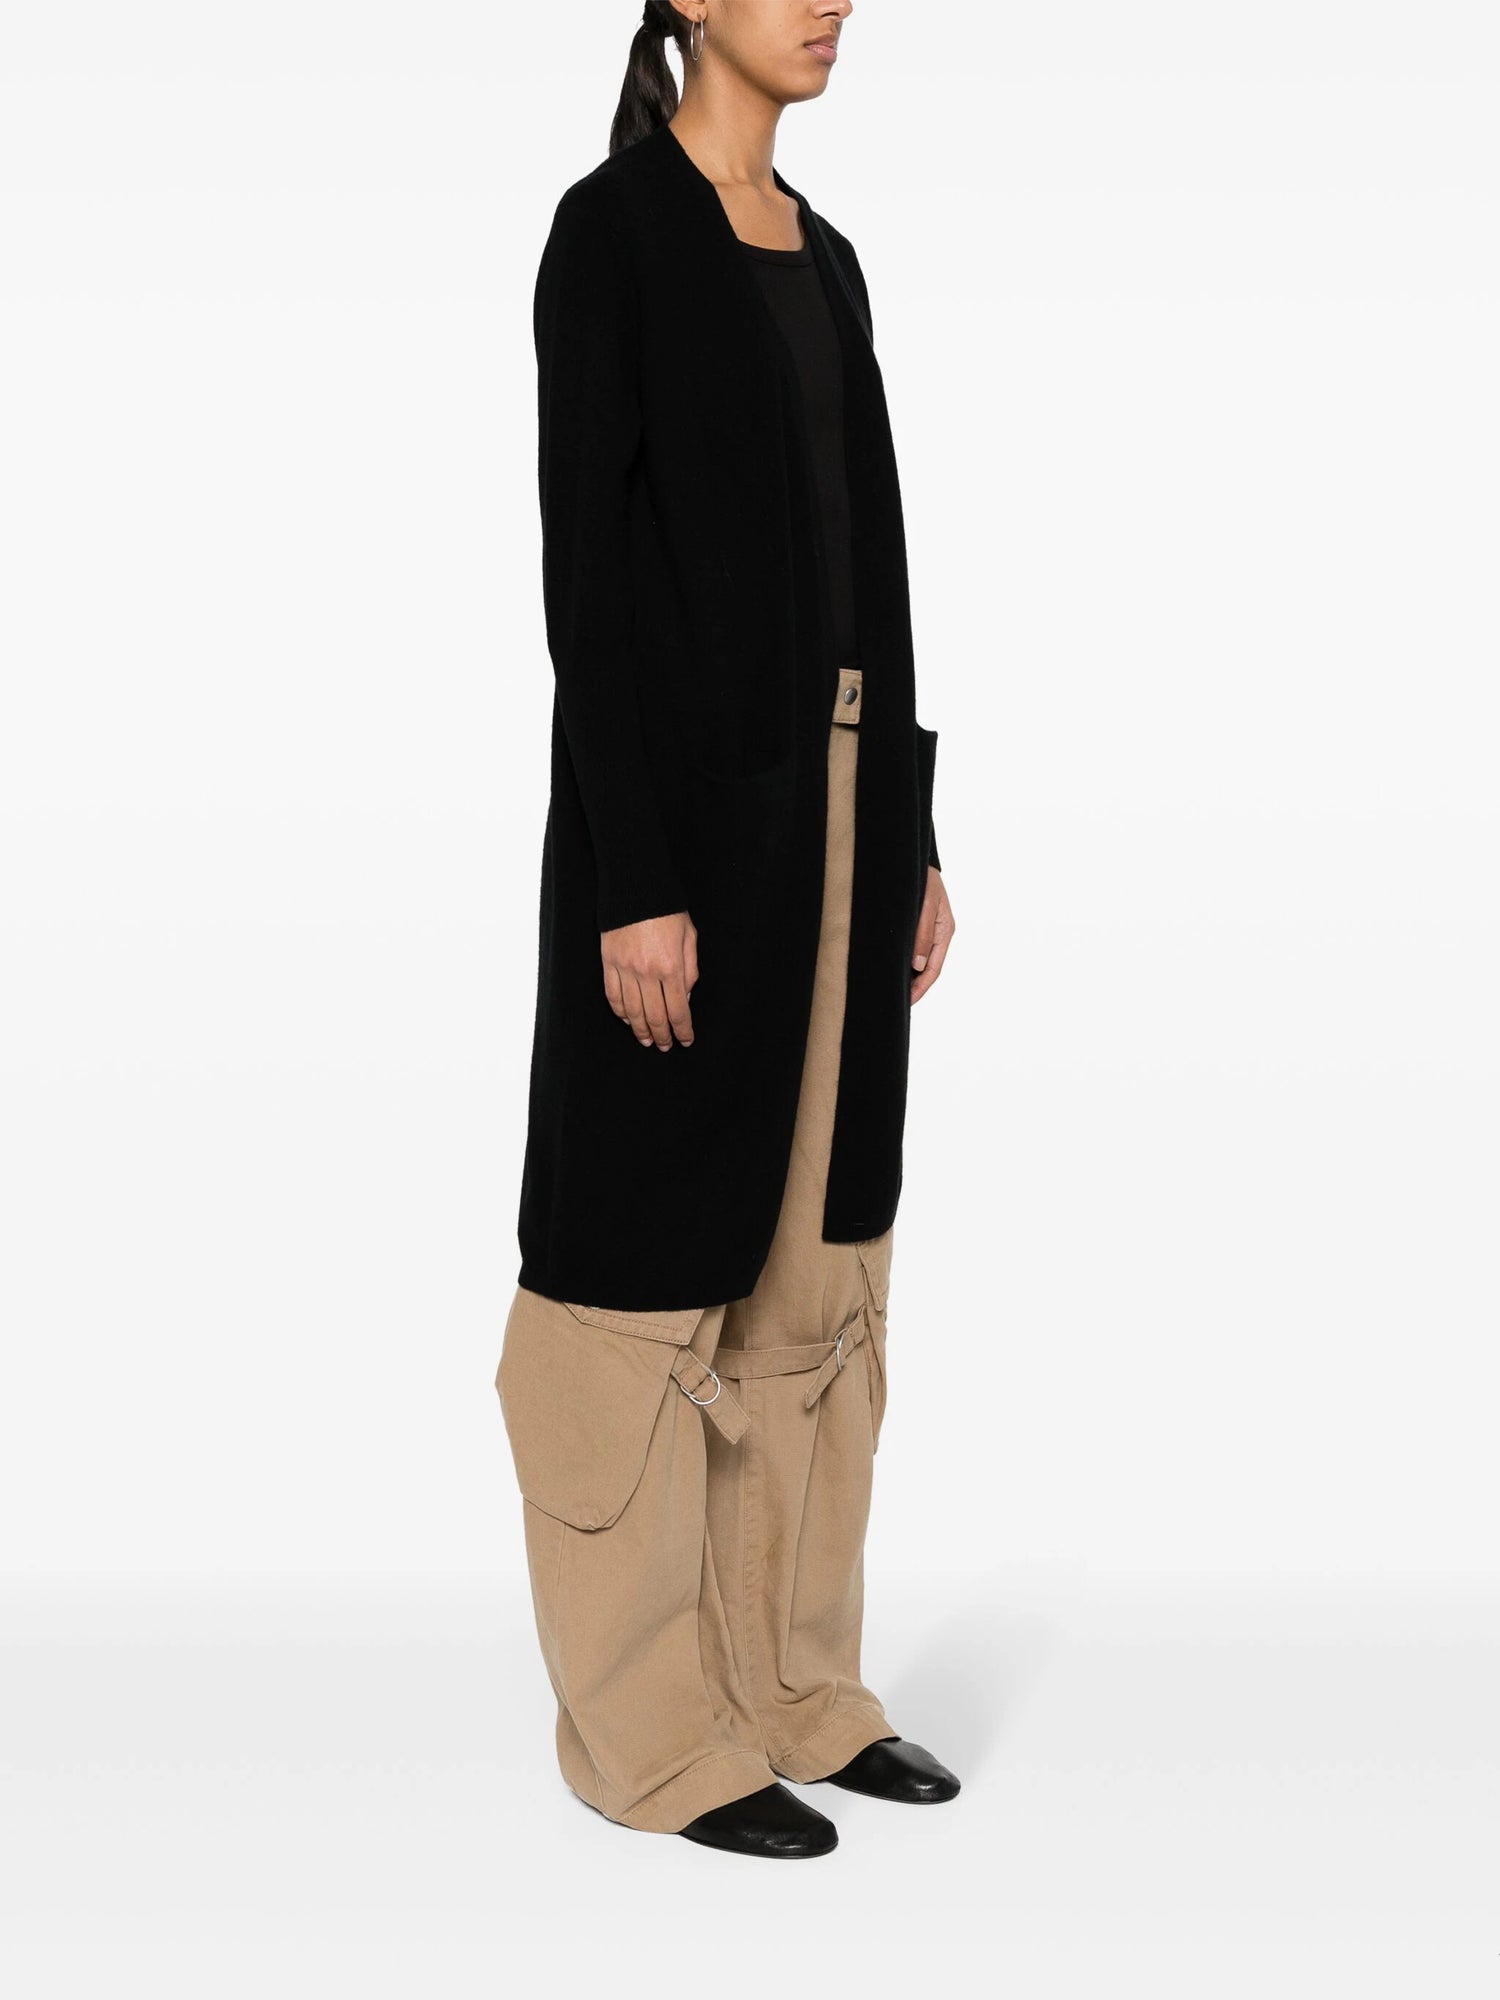 Wool-cashmere open coat, black